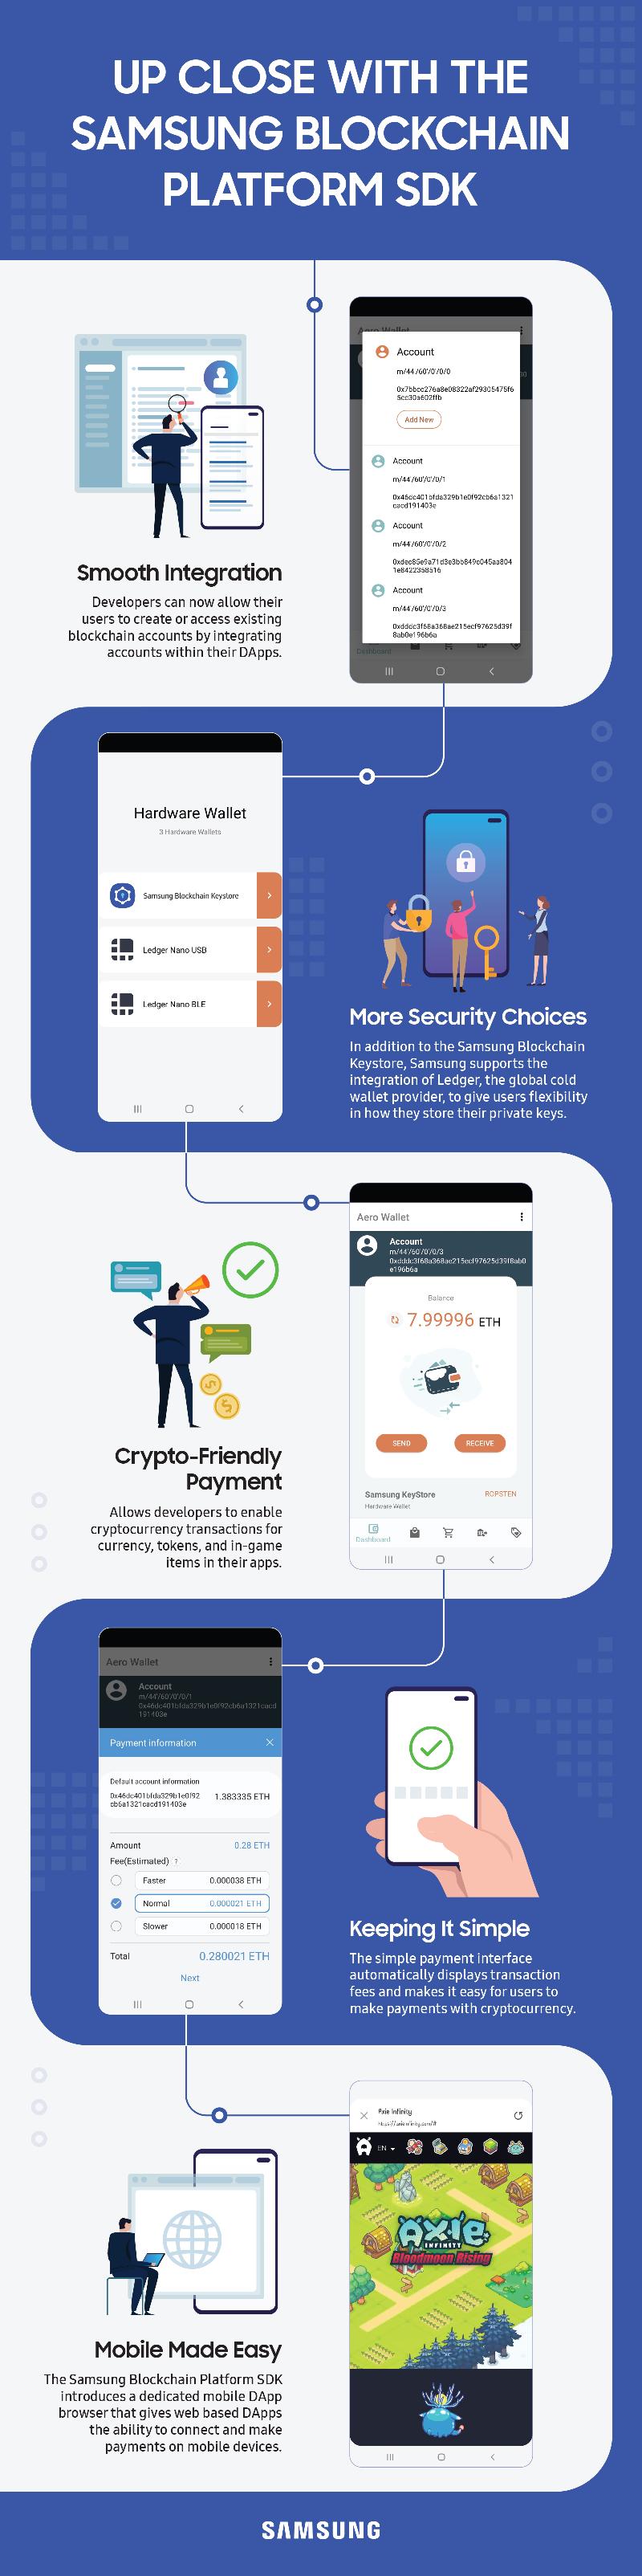 SDC_Samsung-Blockchain_infographic-3.jpg